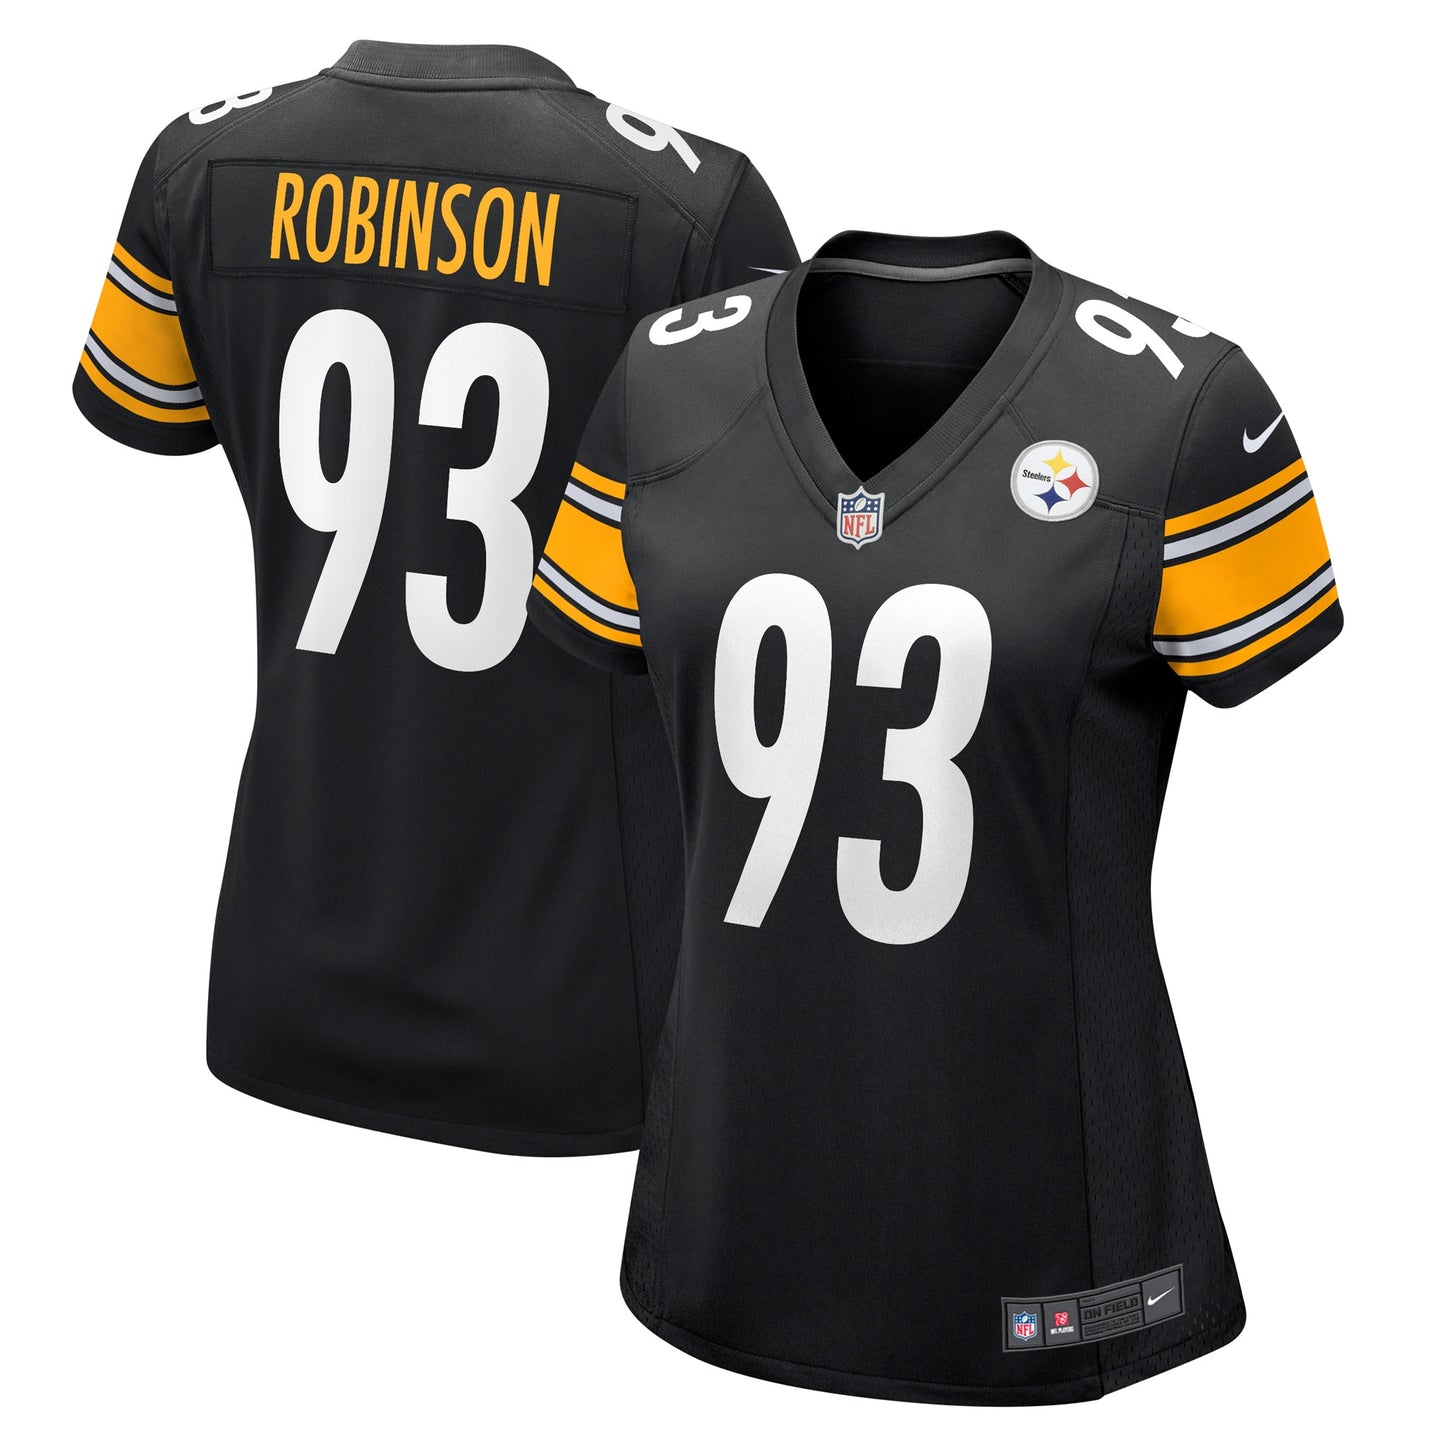 Mark Robinson Pittsburgh Steelers Nike Women's Game Player Jersey - Black